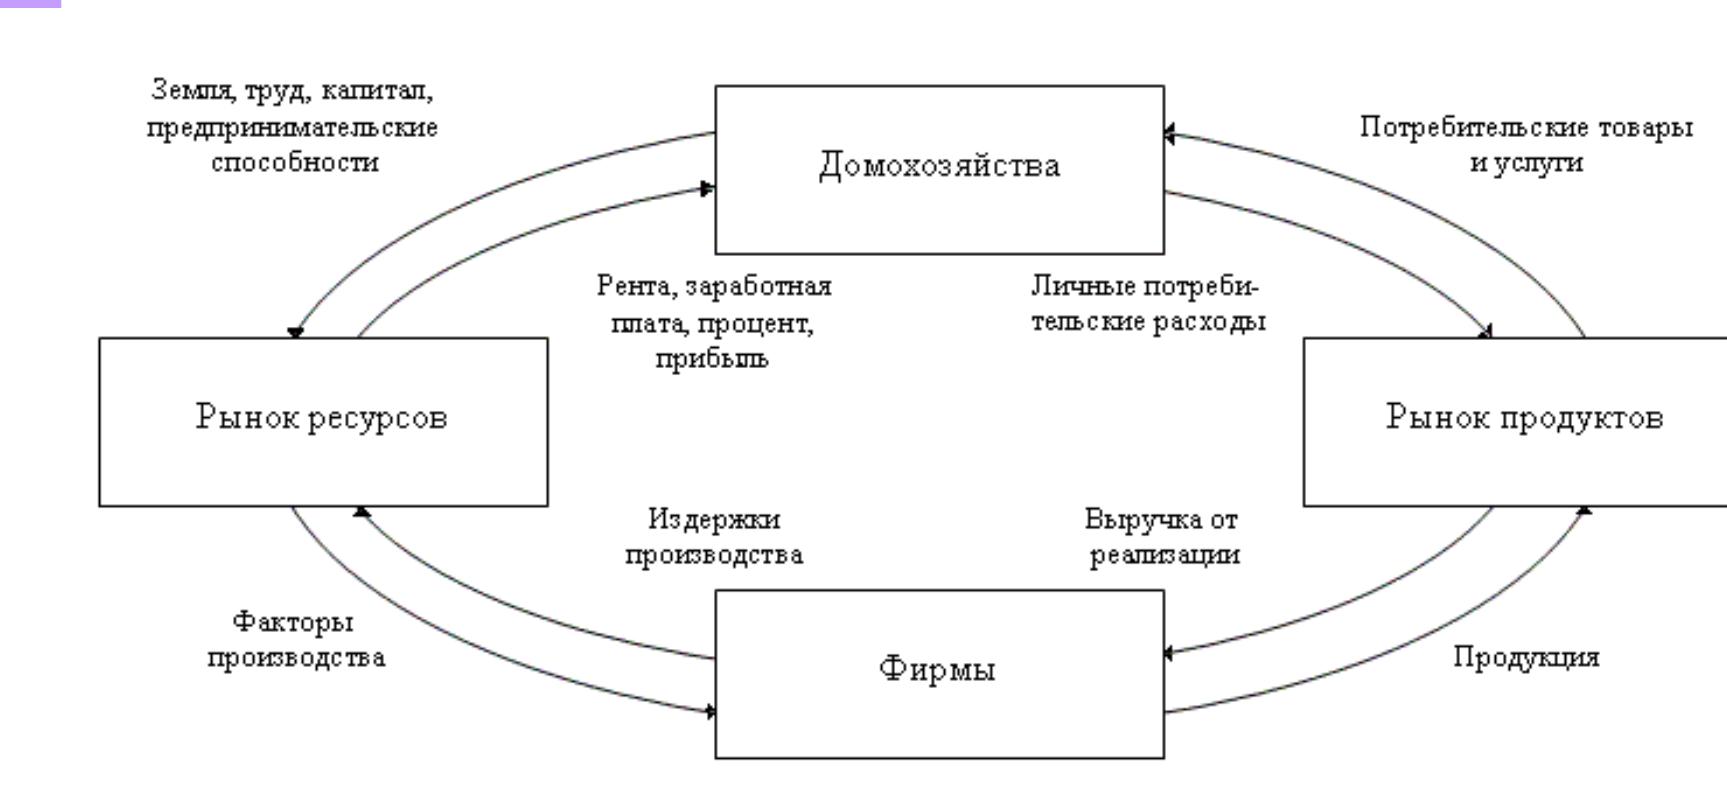 Схема кругооборота продукта и дохода (капитала)